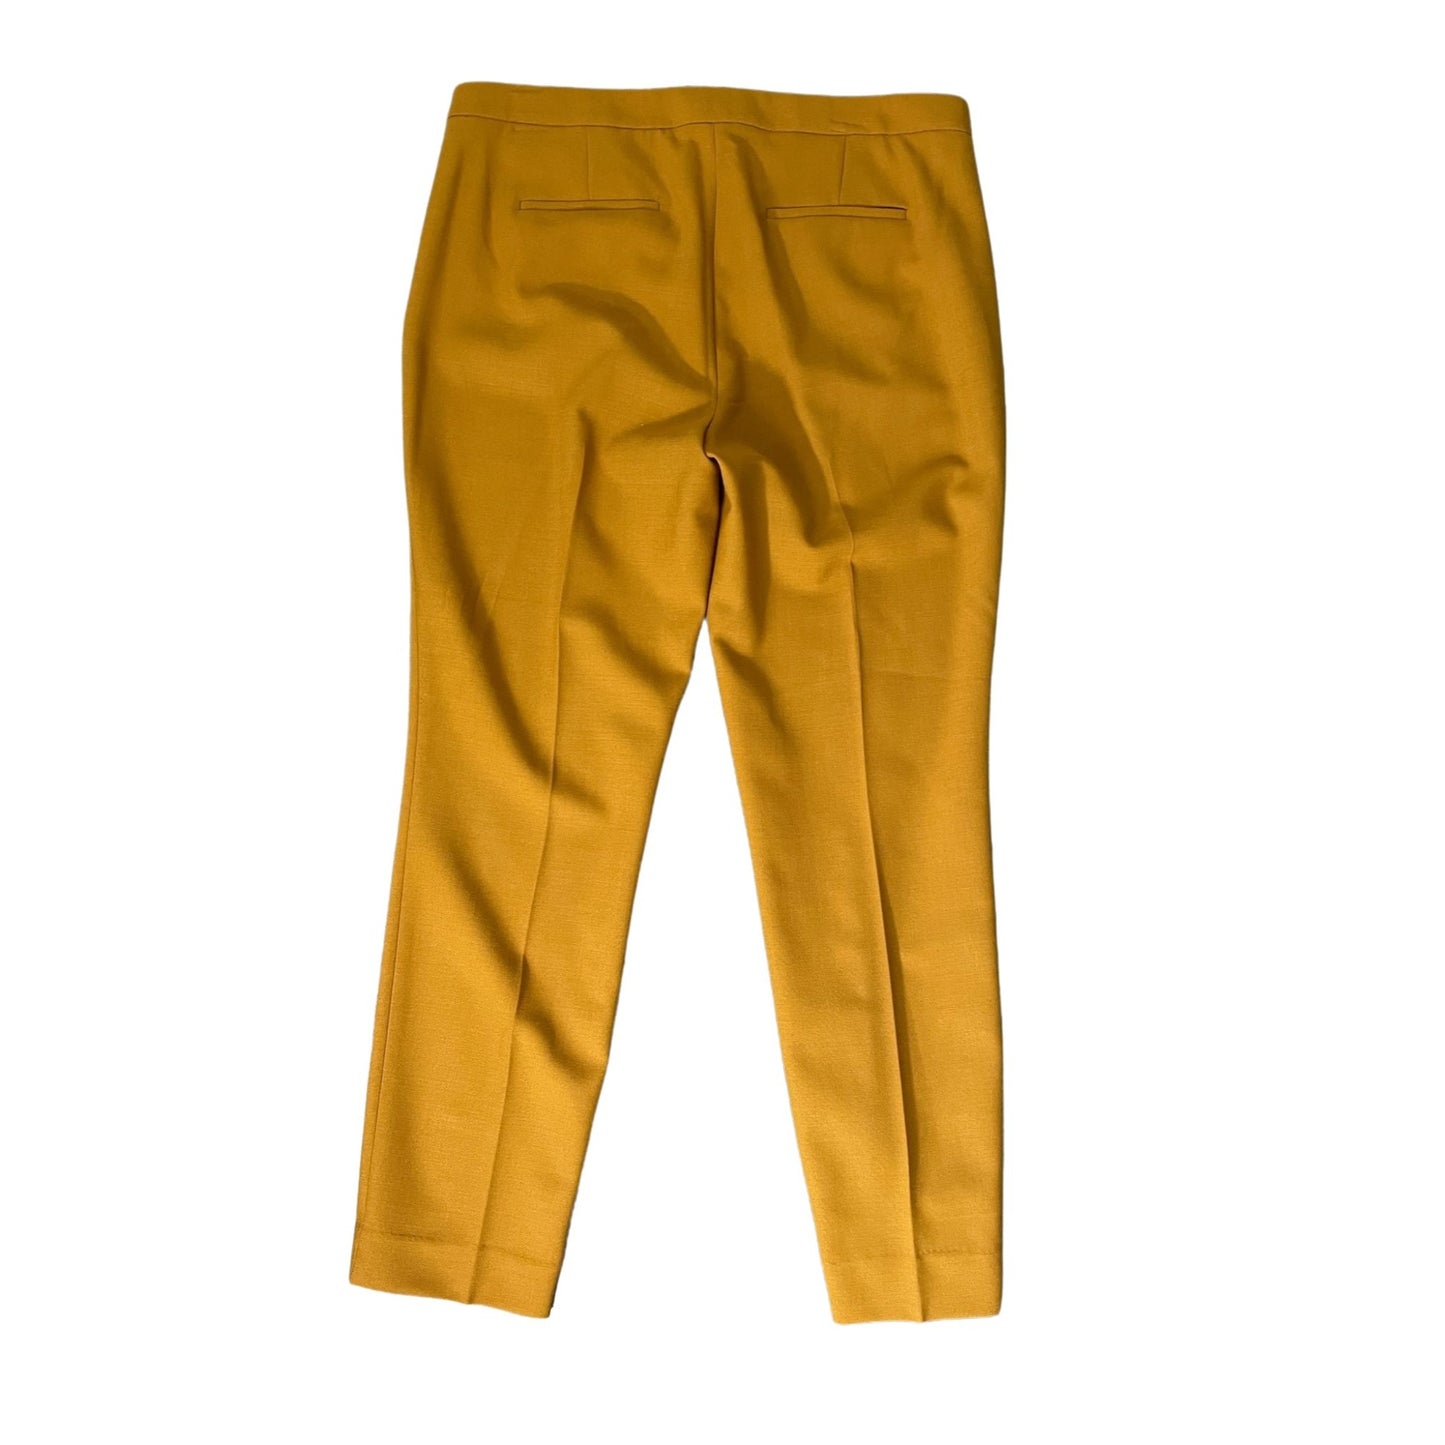 New Mustard J. Crew Trousers - 14